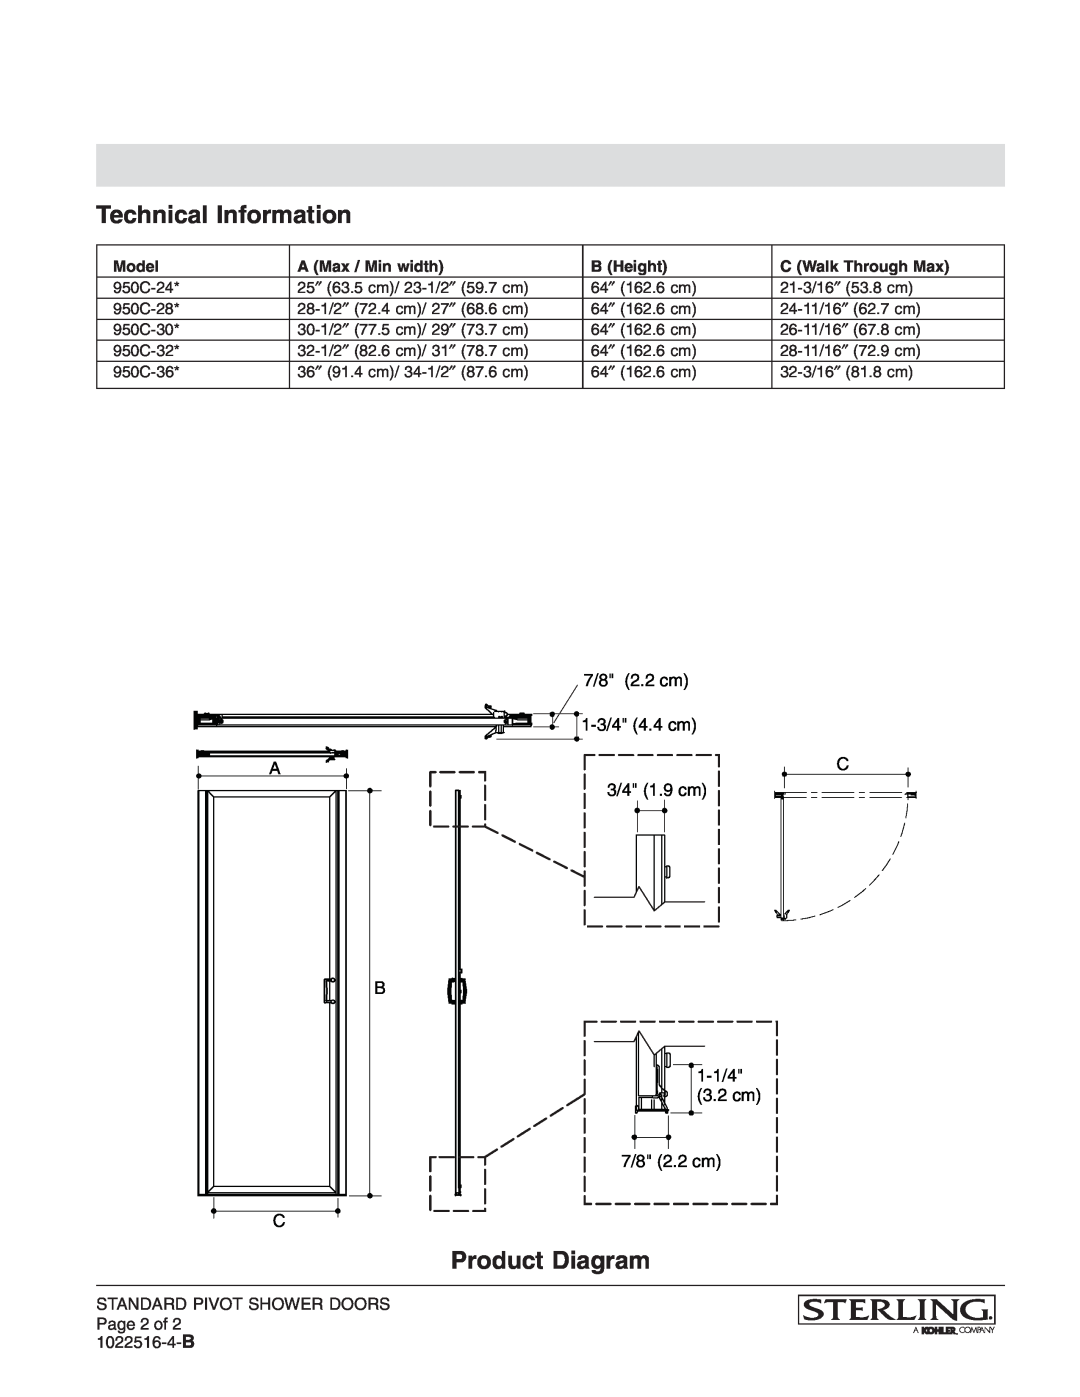 Sterling Plumbing 950C-30* Technical Information, Product Diagram, 7/8 2.2 cm, 1-3/44.4 cm, 3/4 1.9 cm, B 1-1/4, 3.2 cm 